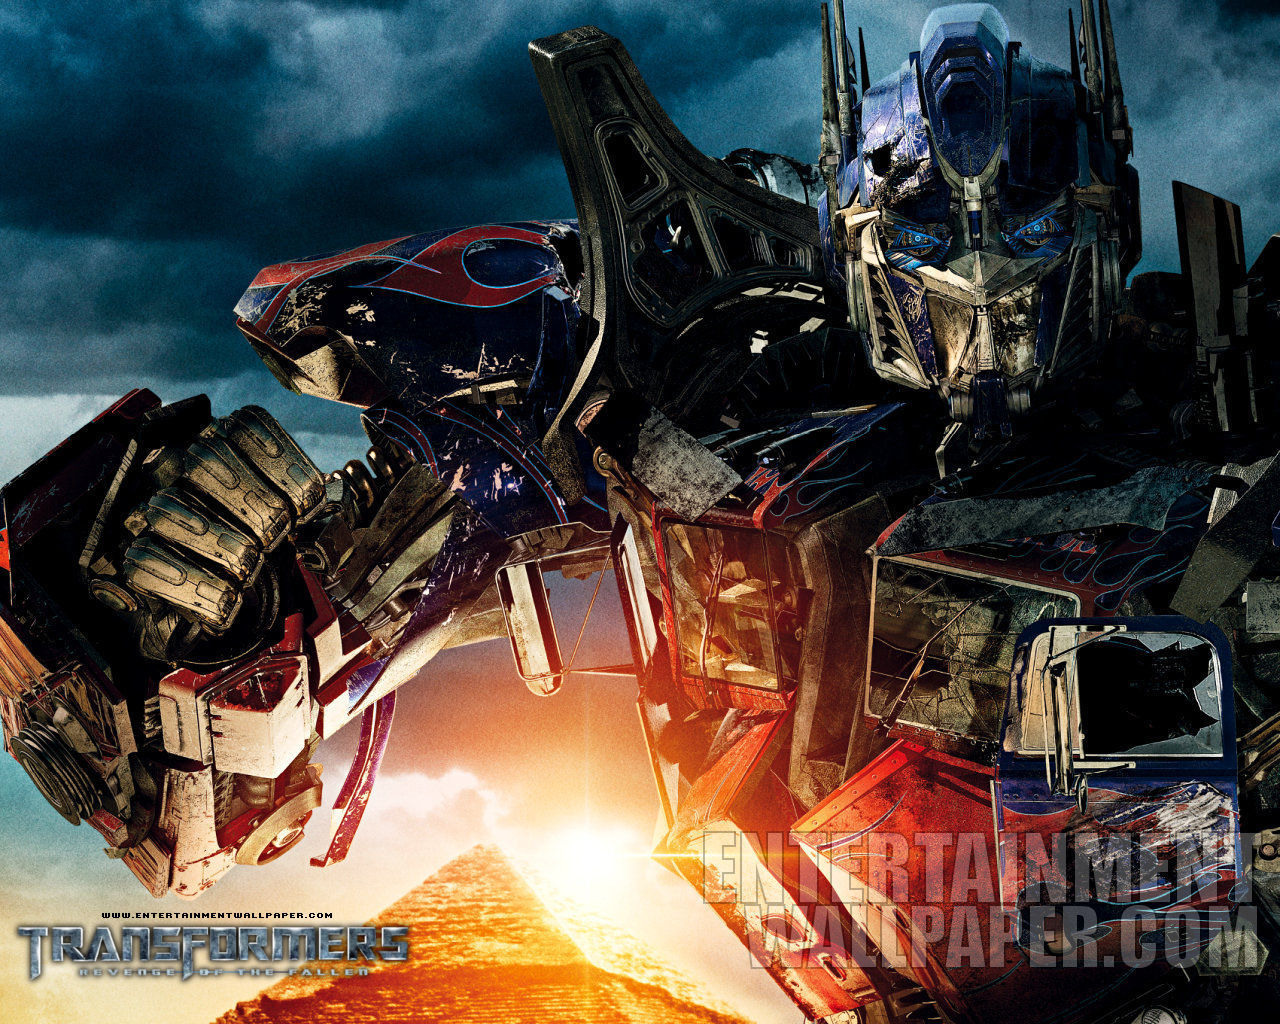 Transformers: Revenge of the Fallen free